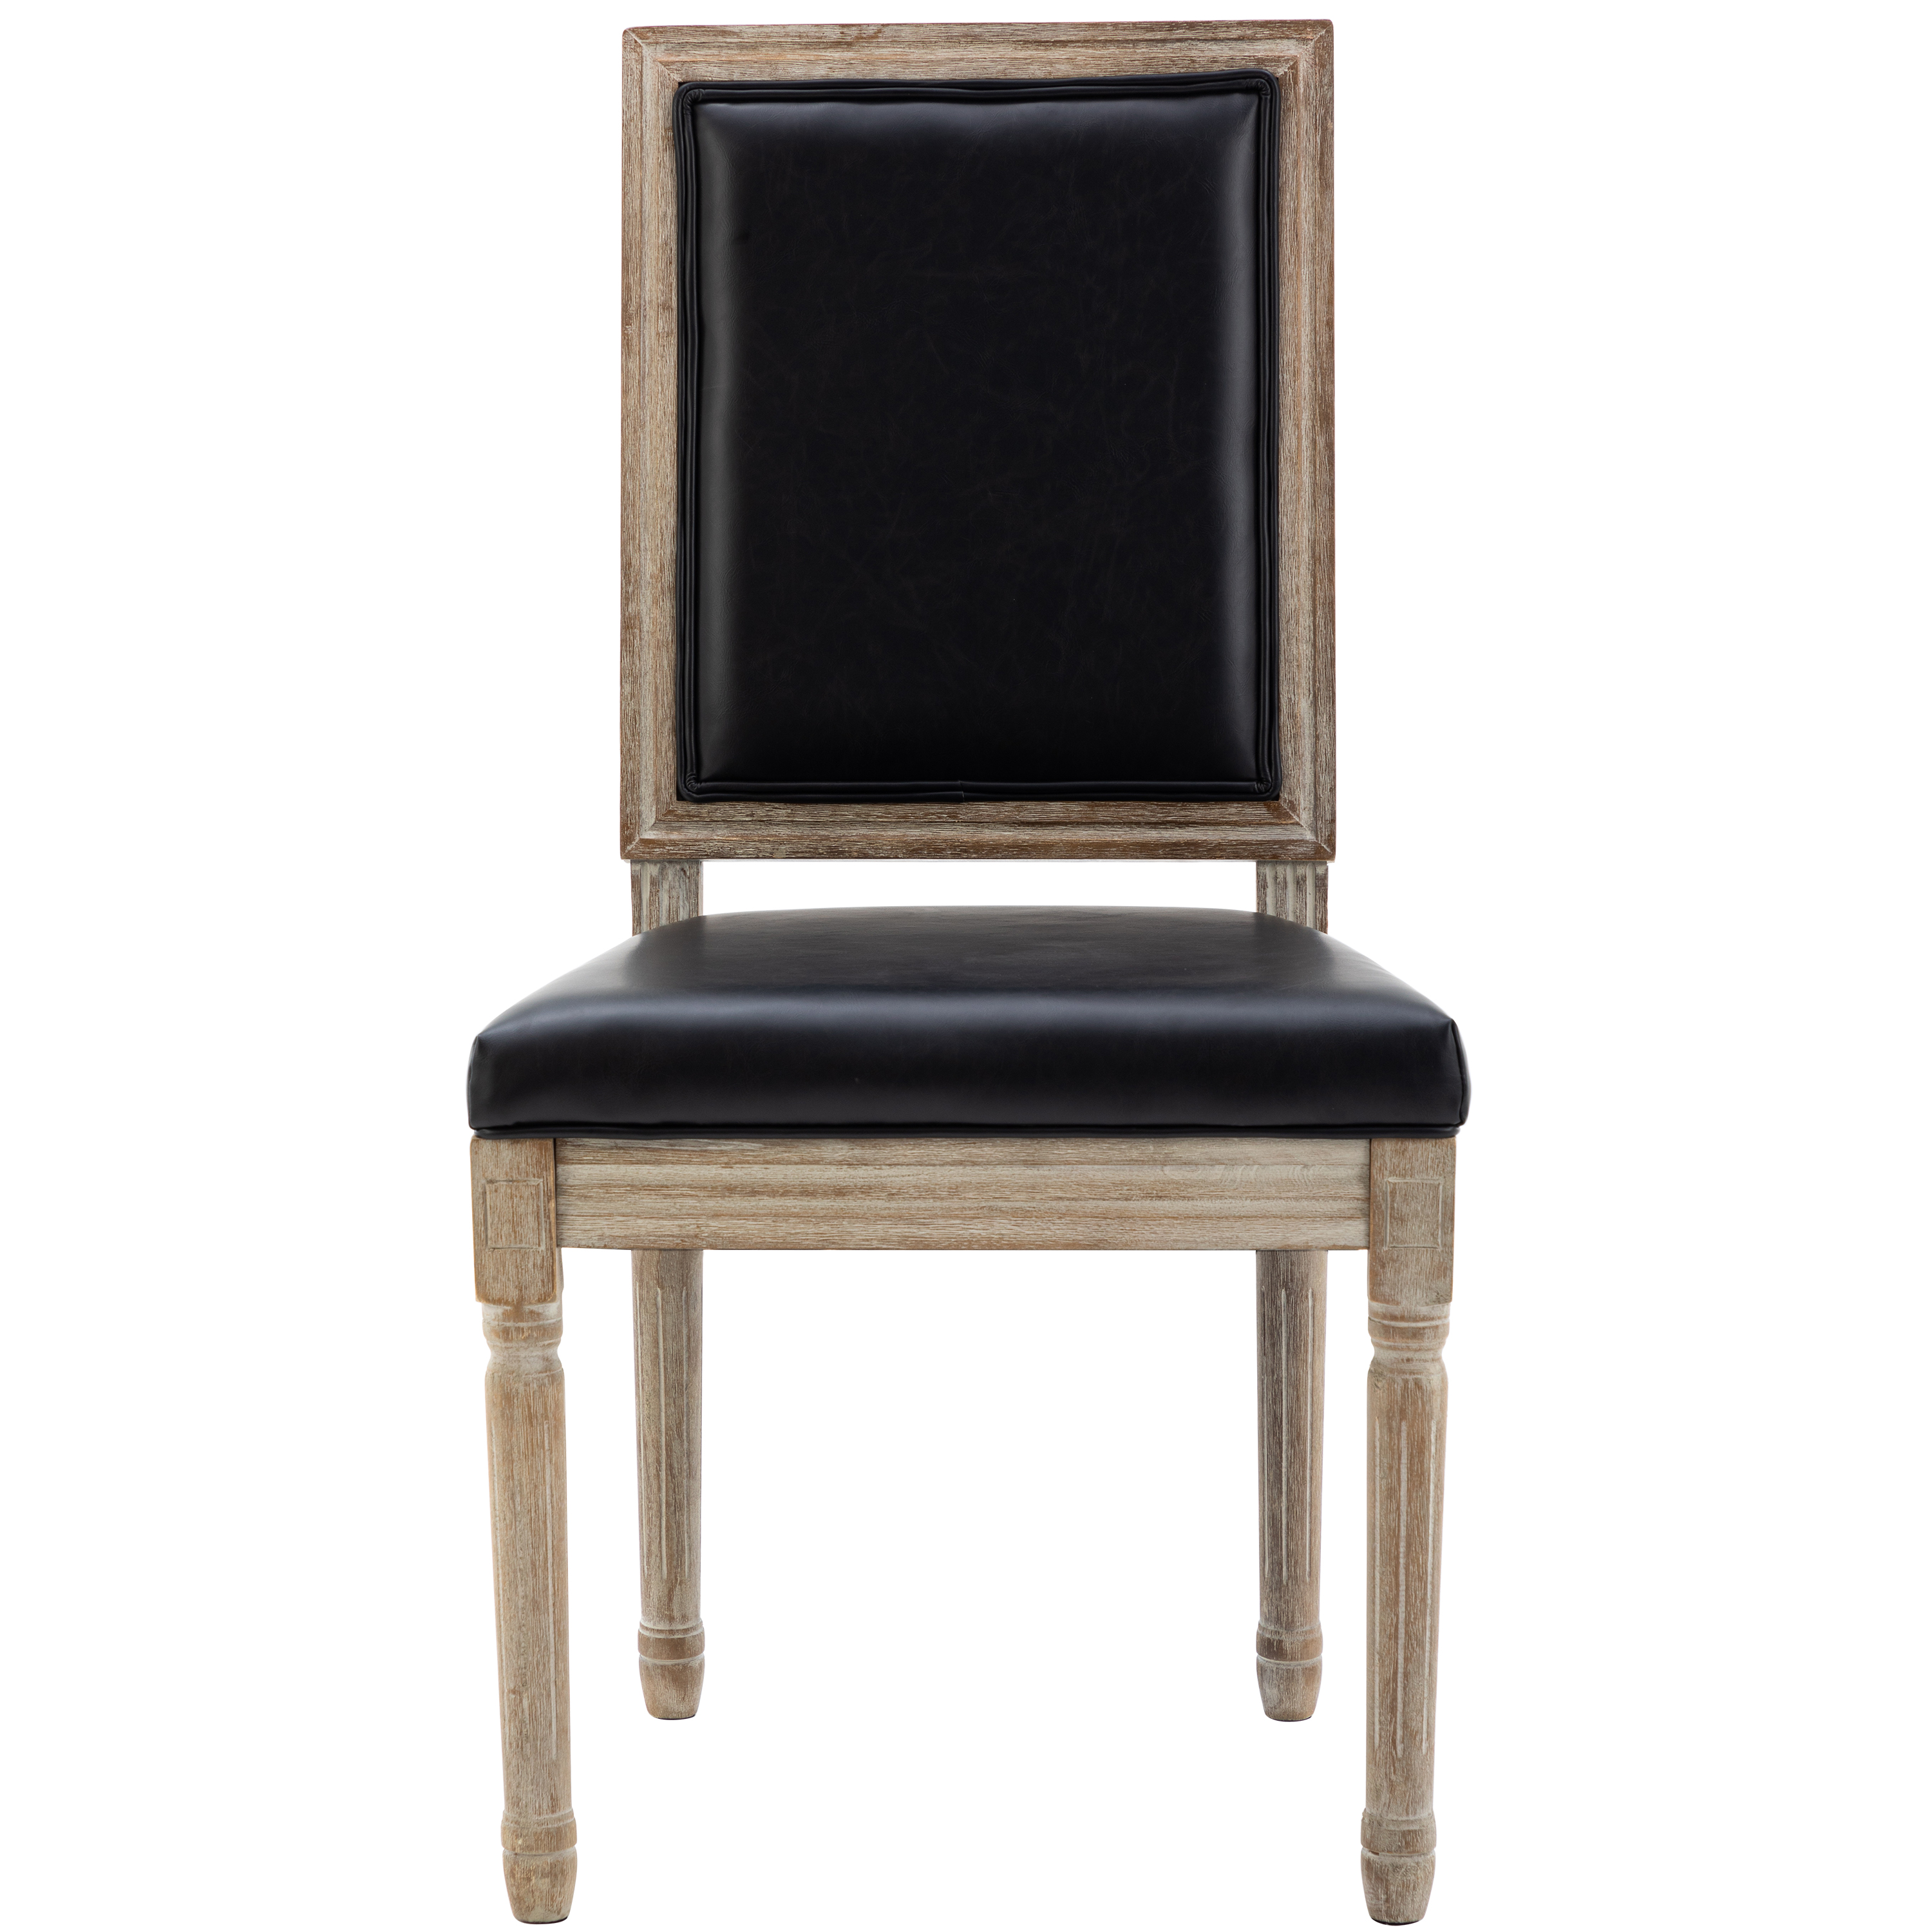 Edith Leather Dining Chairs (Set of 2)-Daya Lane-DR,Leather,Dining Chairs,Light Wood,DC,farmhouse,french,retro